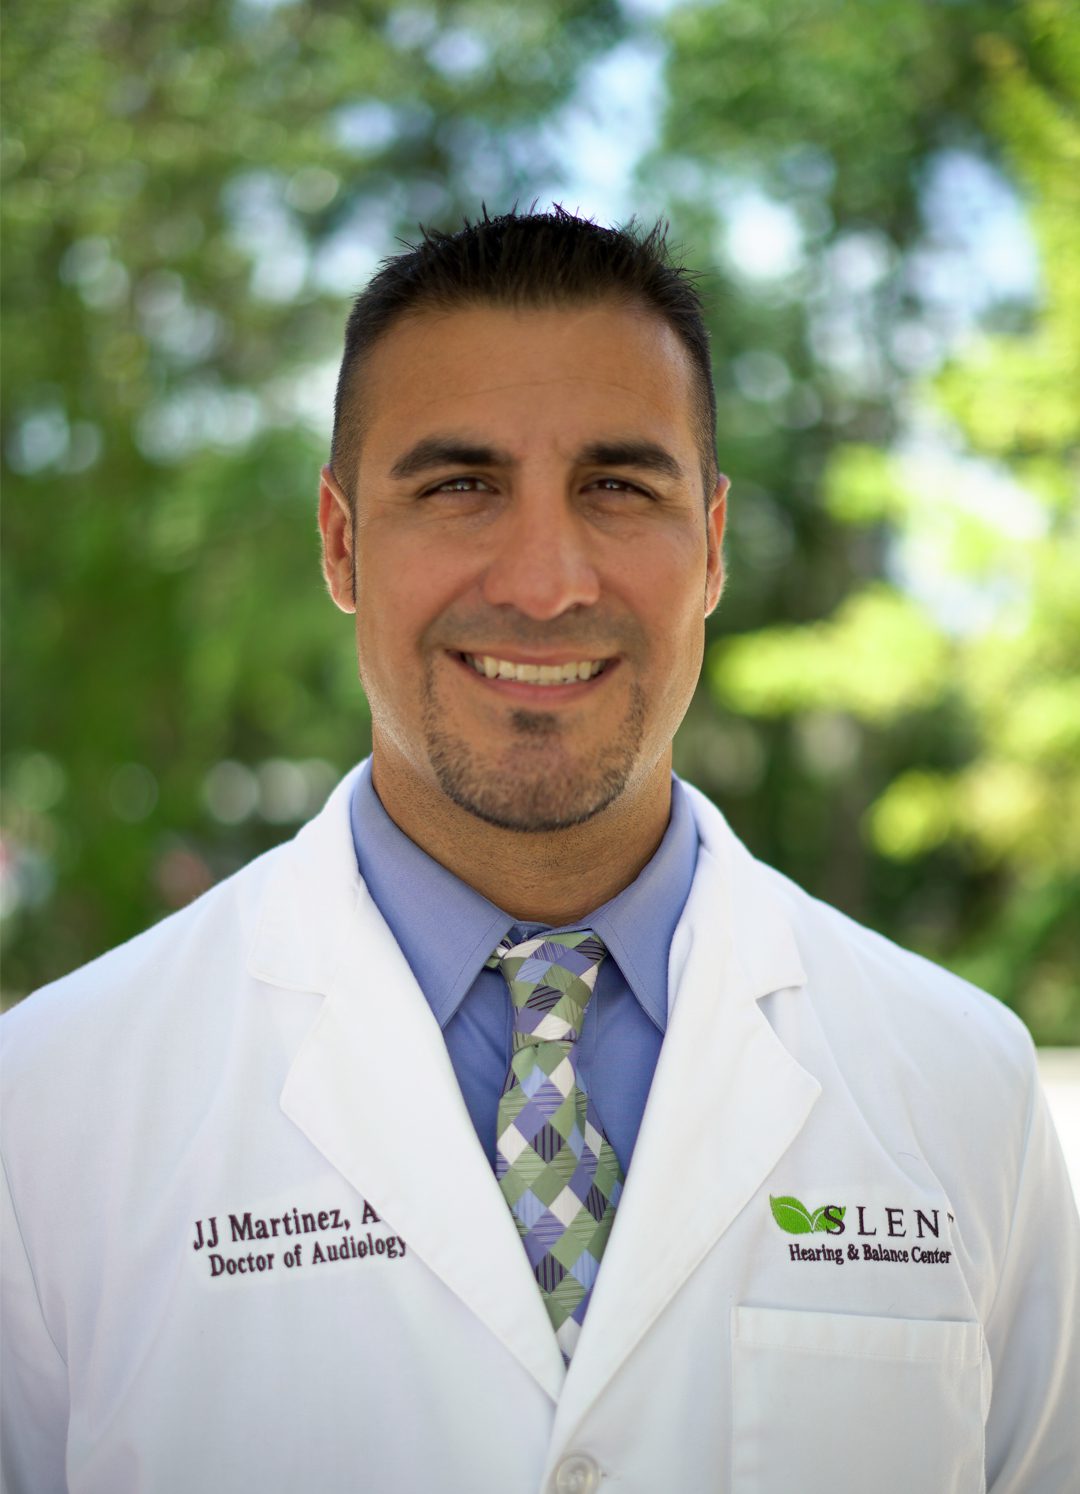 Meet the team - Dr. JJ Martinez